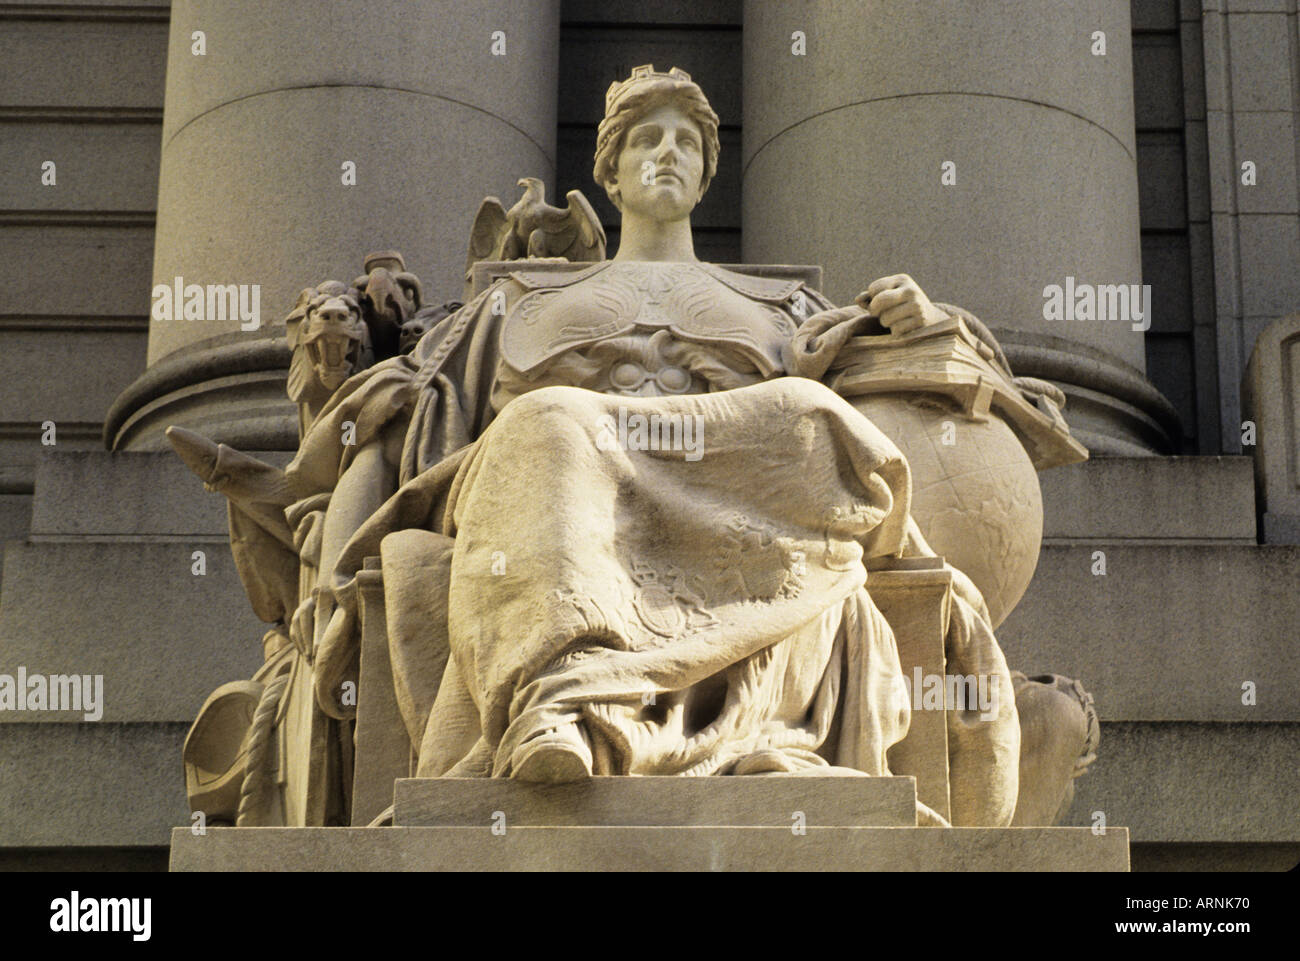 Europaskulptur von Daniel Chester French vor dem Alexander Hamilton US Custom House im Wall Street Historic District New York City, USA Stockfoto